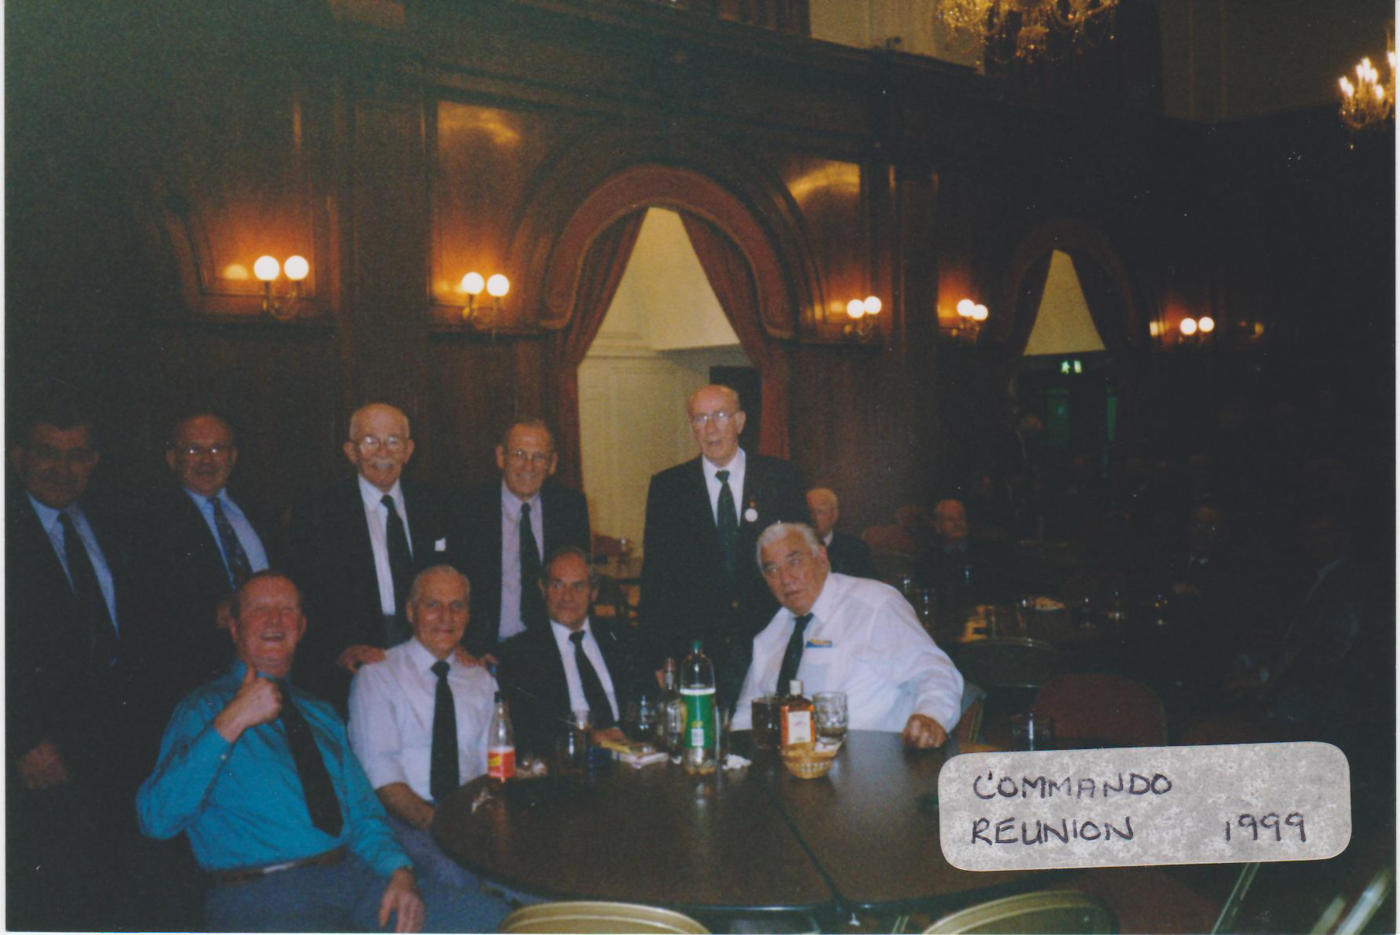 Leo Hatch, Norman Brion, Richmond Matthews, Bill Proctor and others